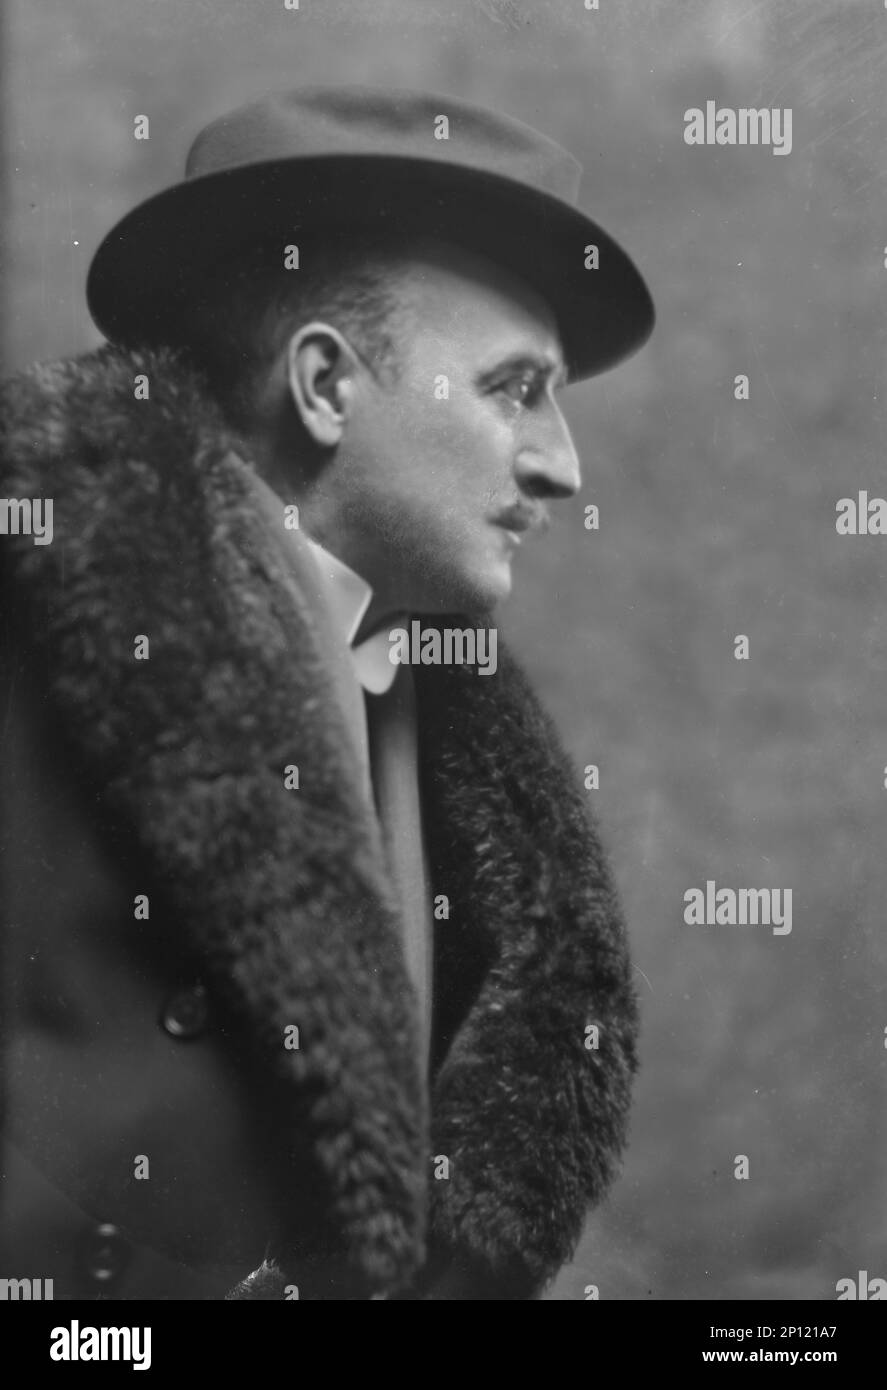 Keeling, Robert Lee, Mr., portrait photograph, 1915 Feb. 4. Stock Photo